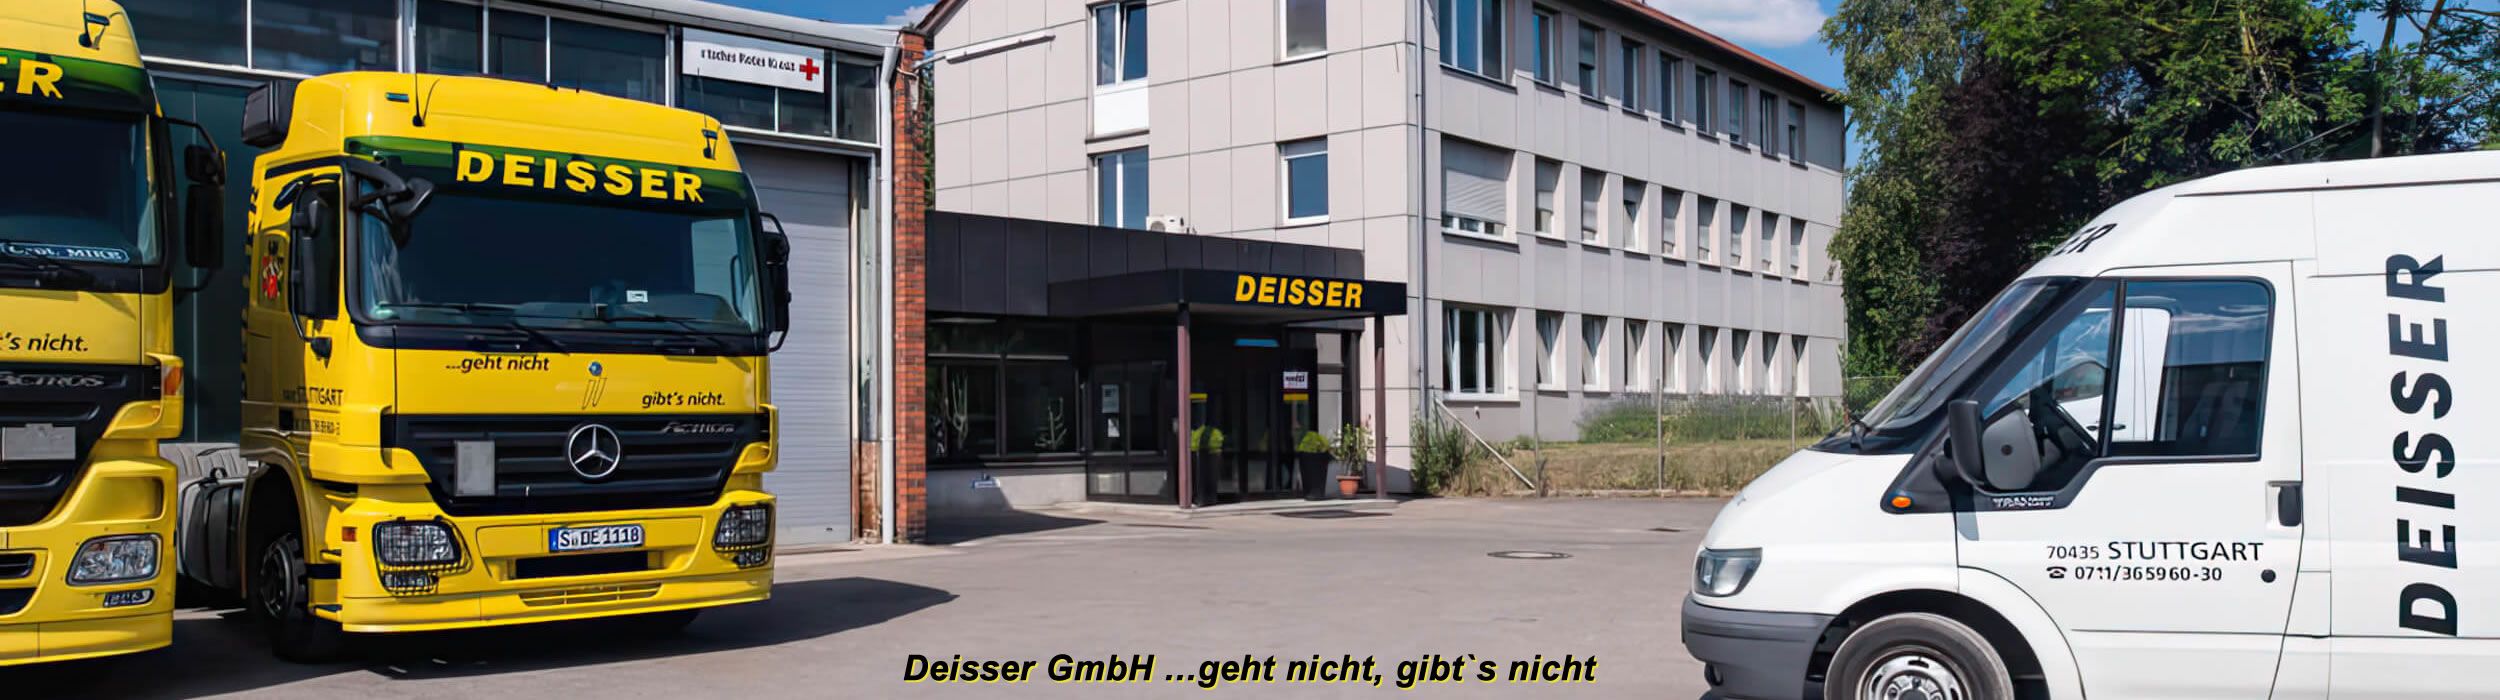 Deisser GmbH / Transportlogistik Seecontainer / Soziales Engagement